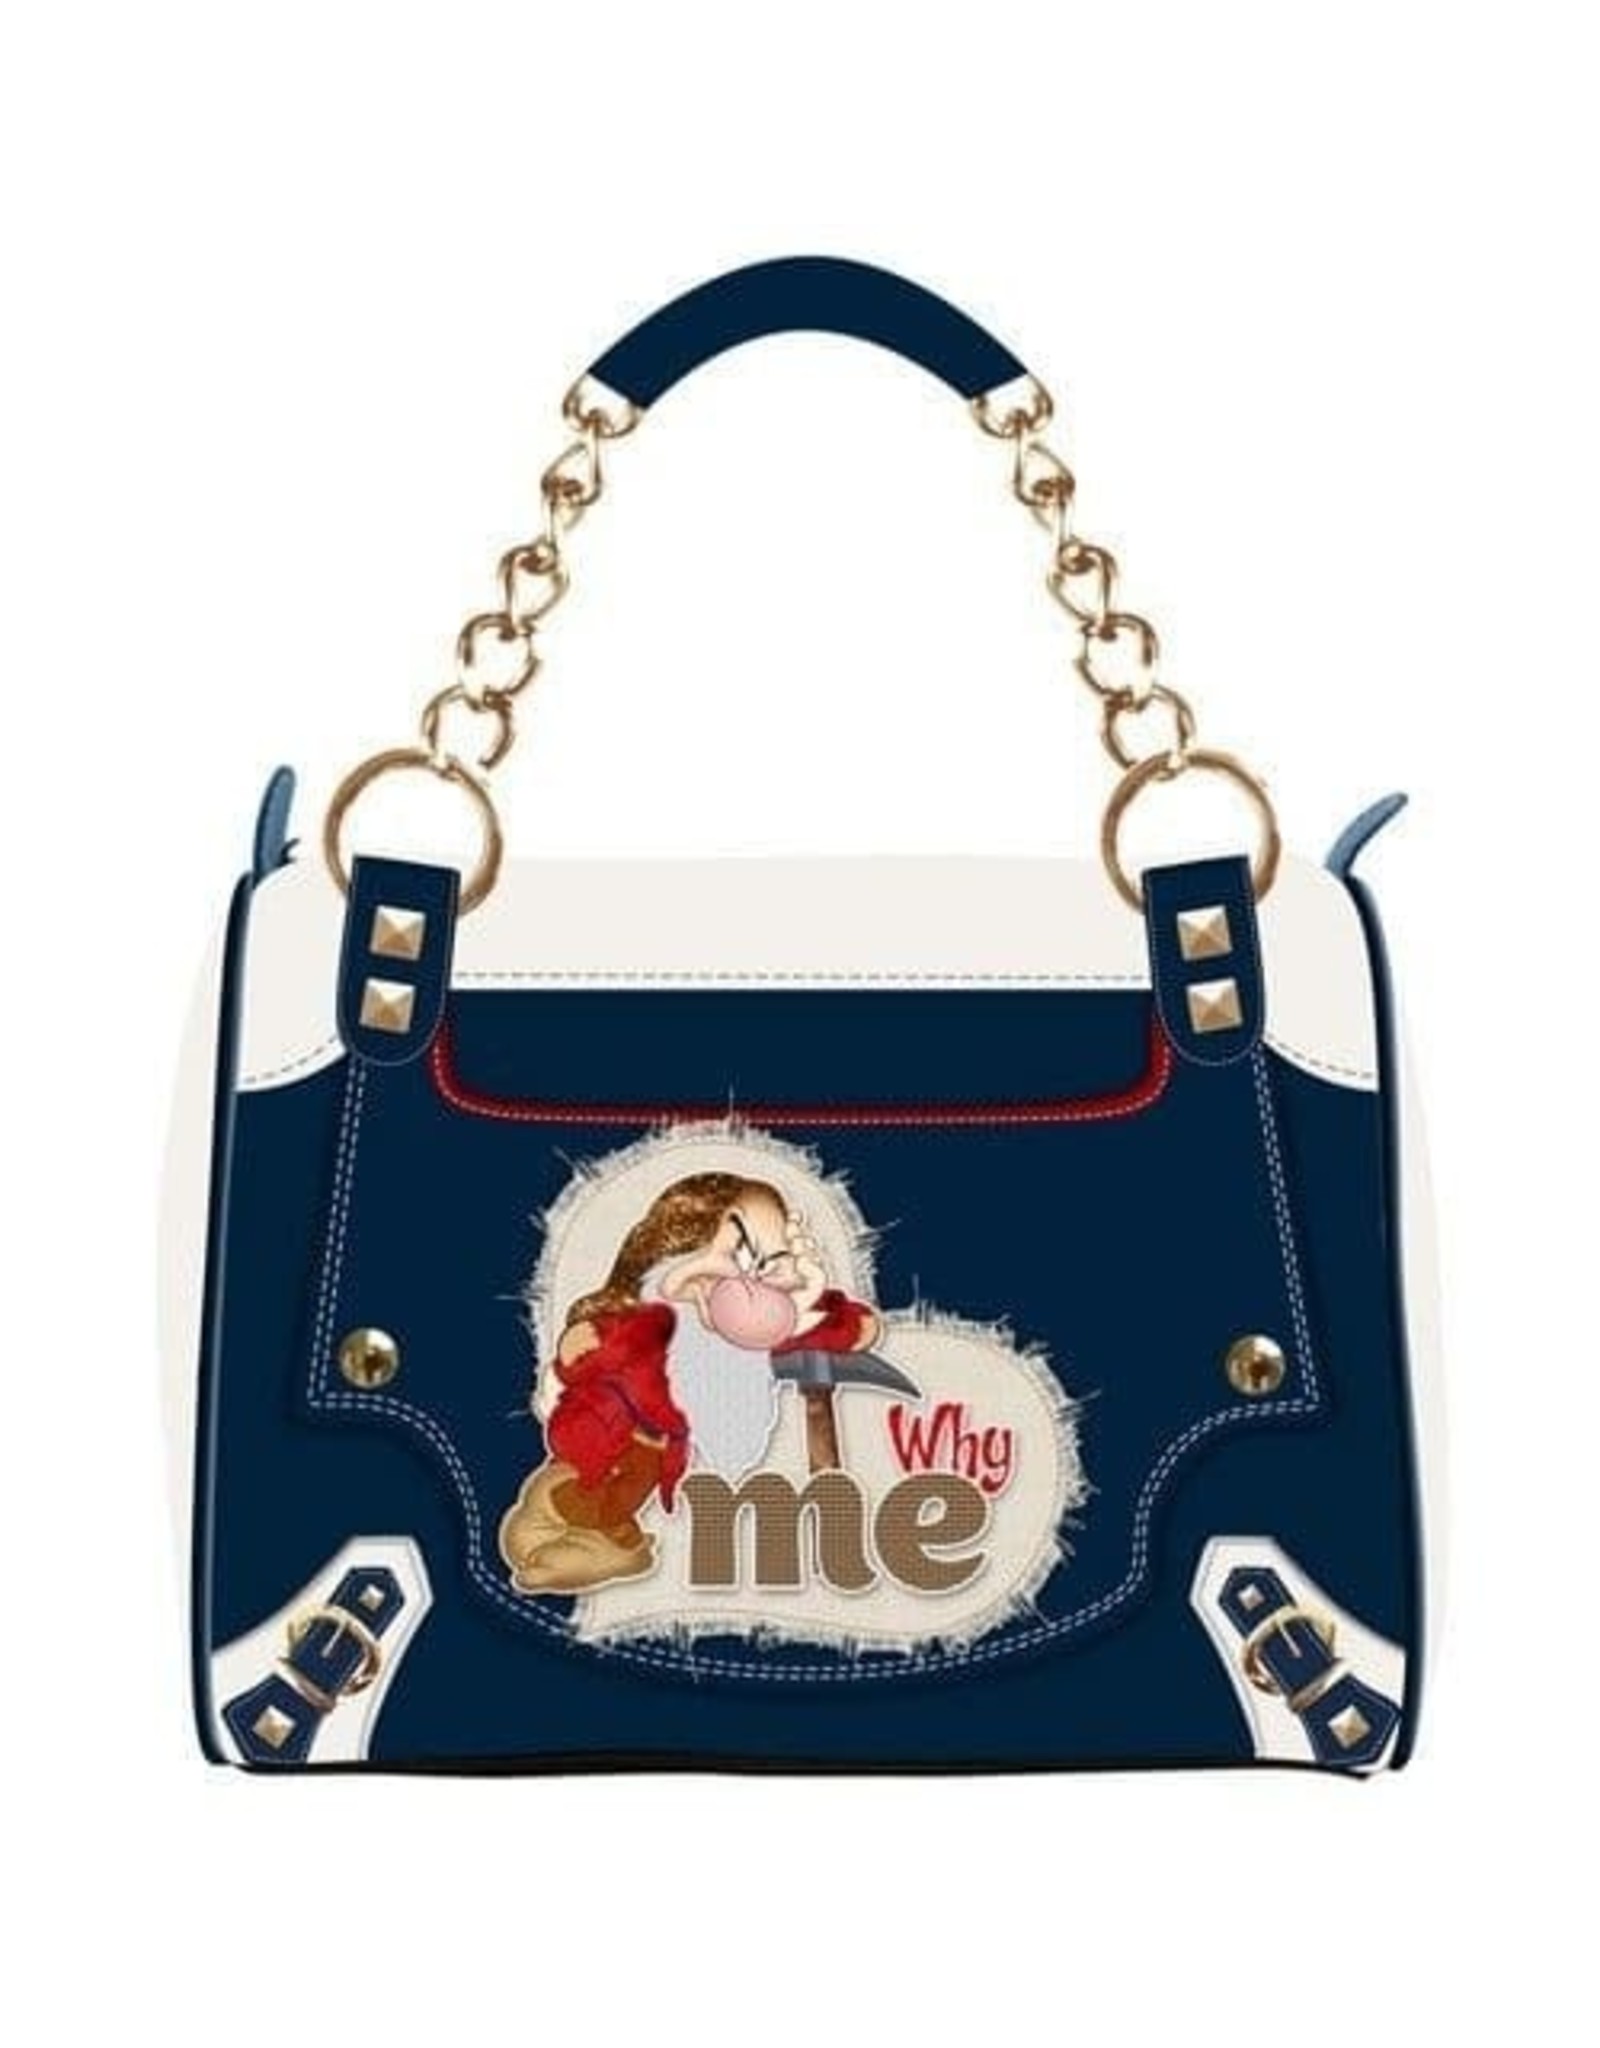 Disney Disney bags - Disney handbag Grumpy Why me